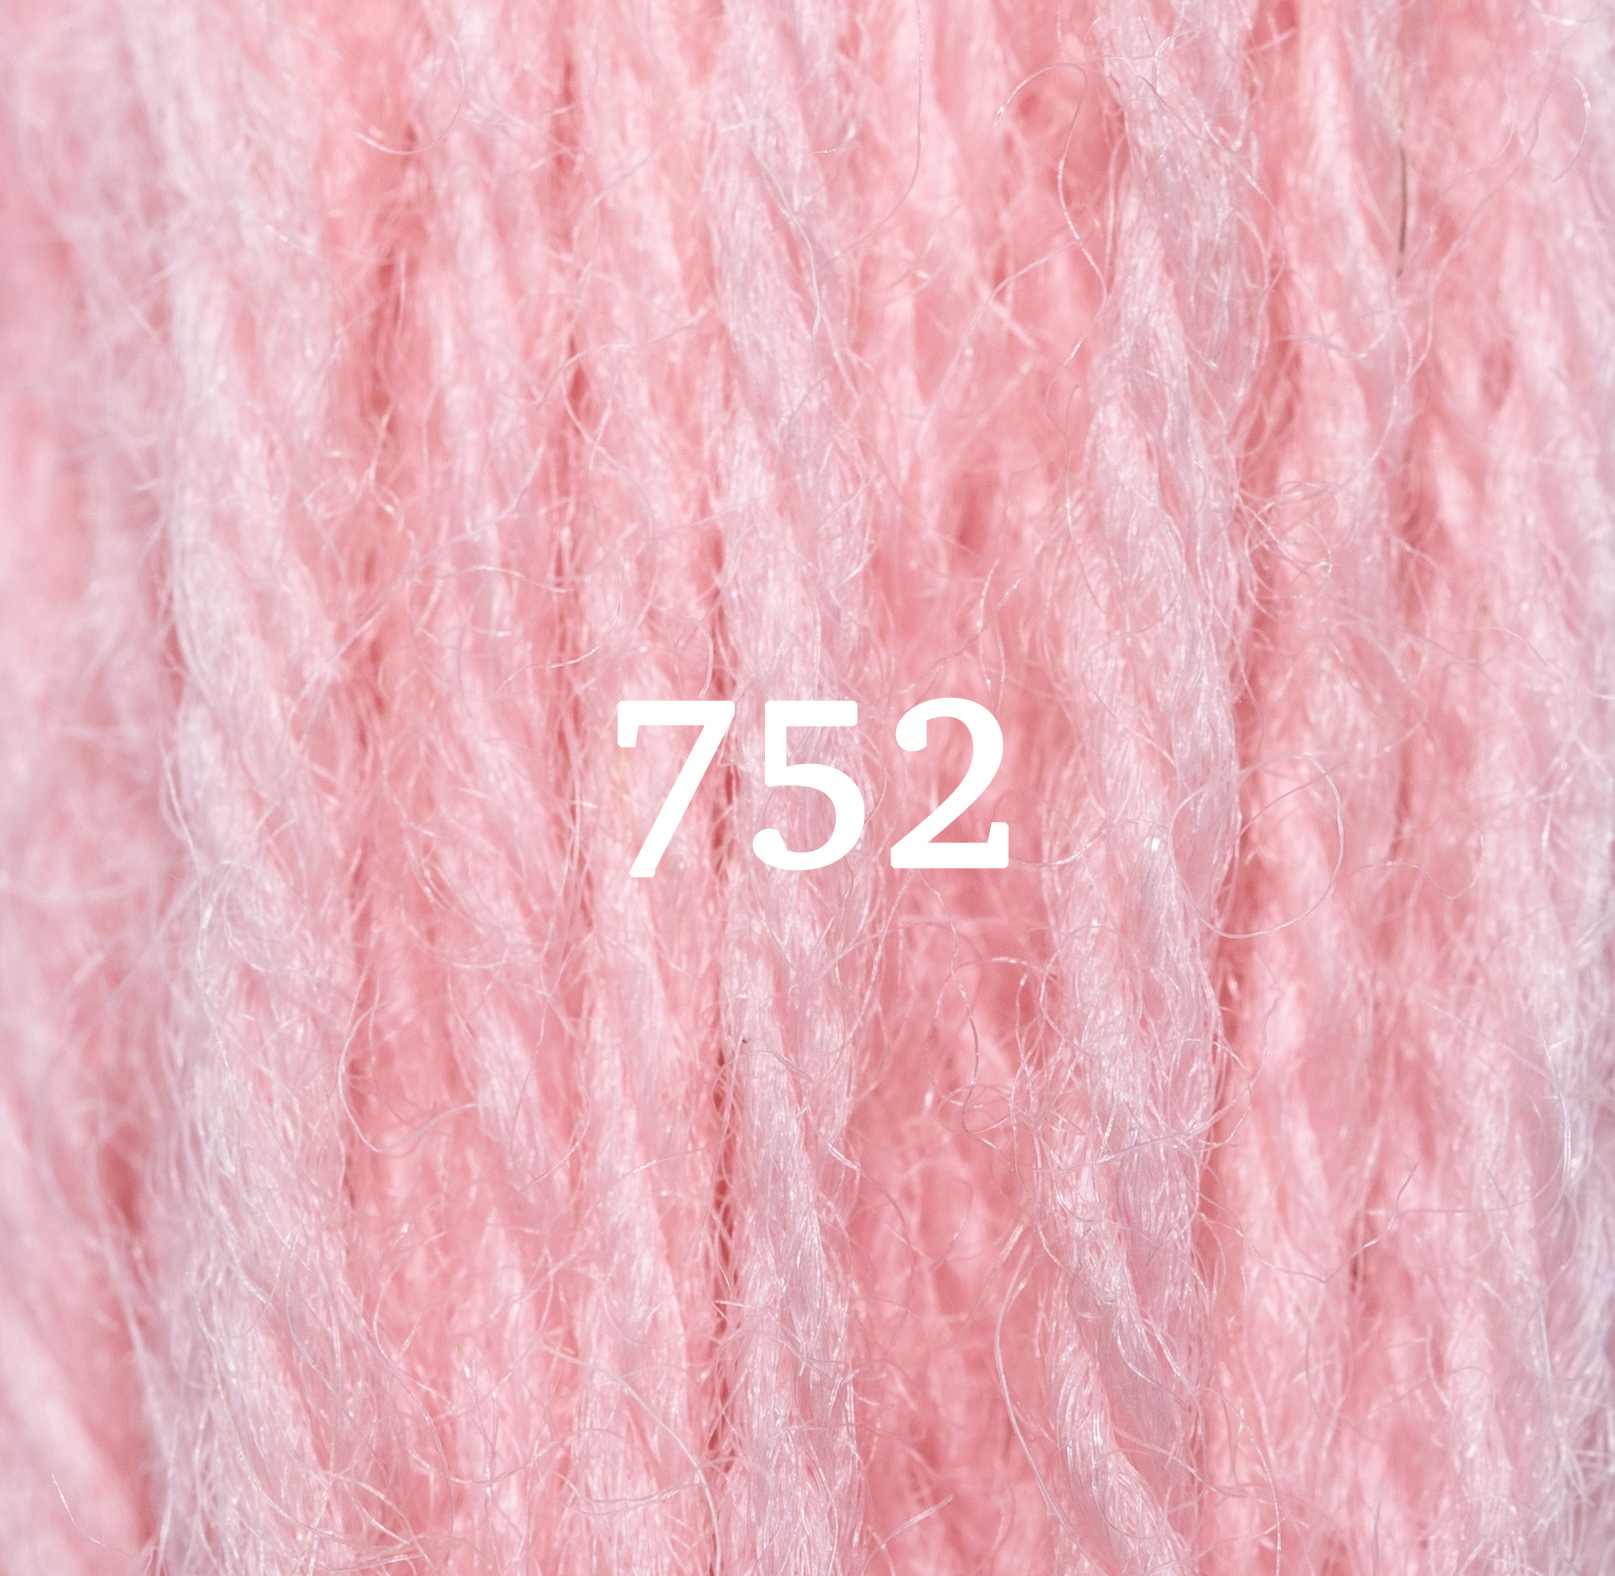 Appletons Tapestry Wool - Pinks